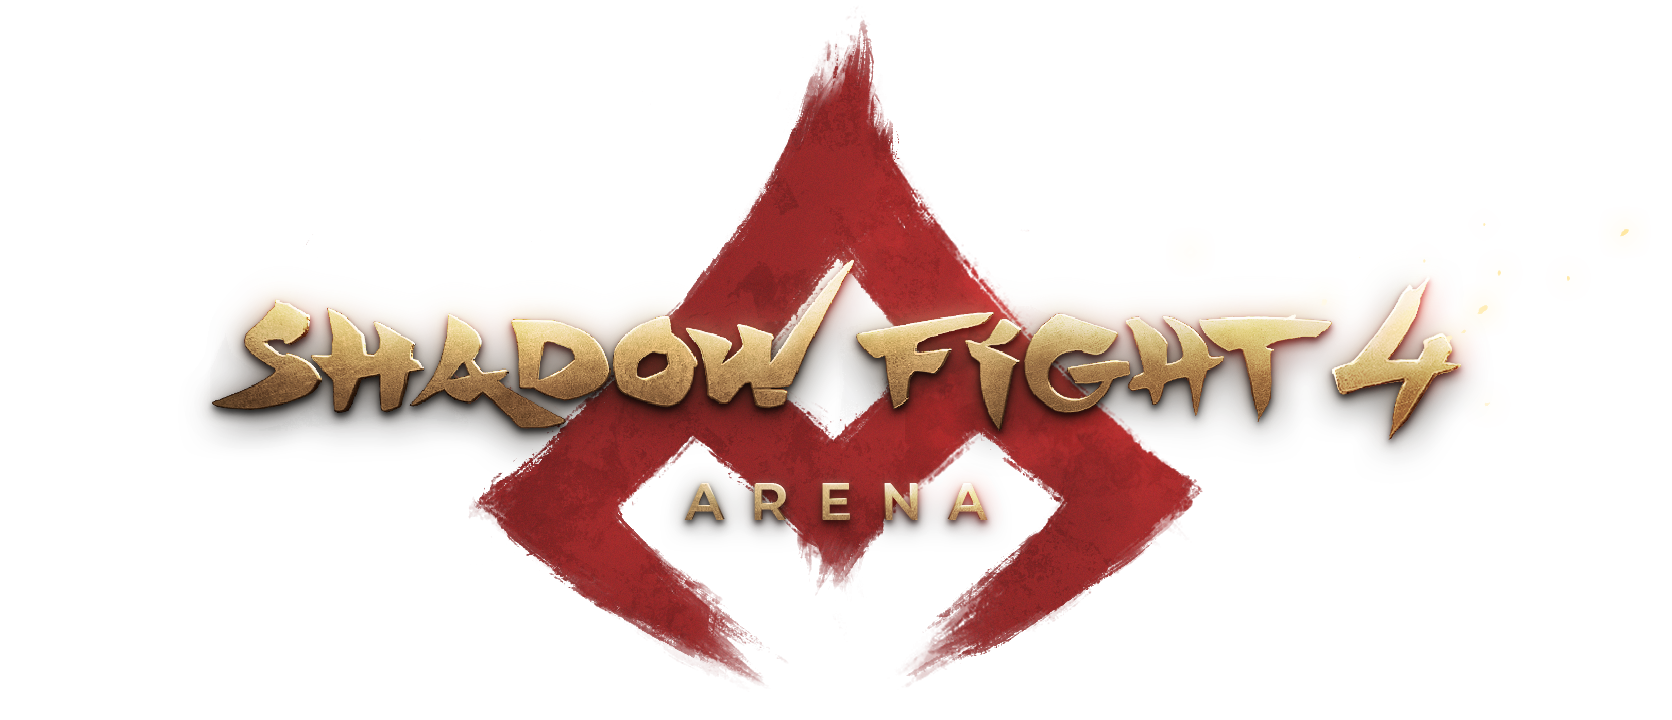 Shadow Fight Arena иконка. Shadow Fight Arena logo. Shadow Fight Arena logo PNG. Шедоу файт 4 Арена. Shadow arena промокод